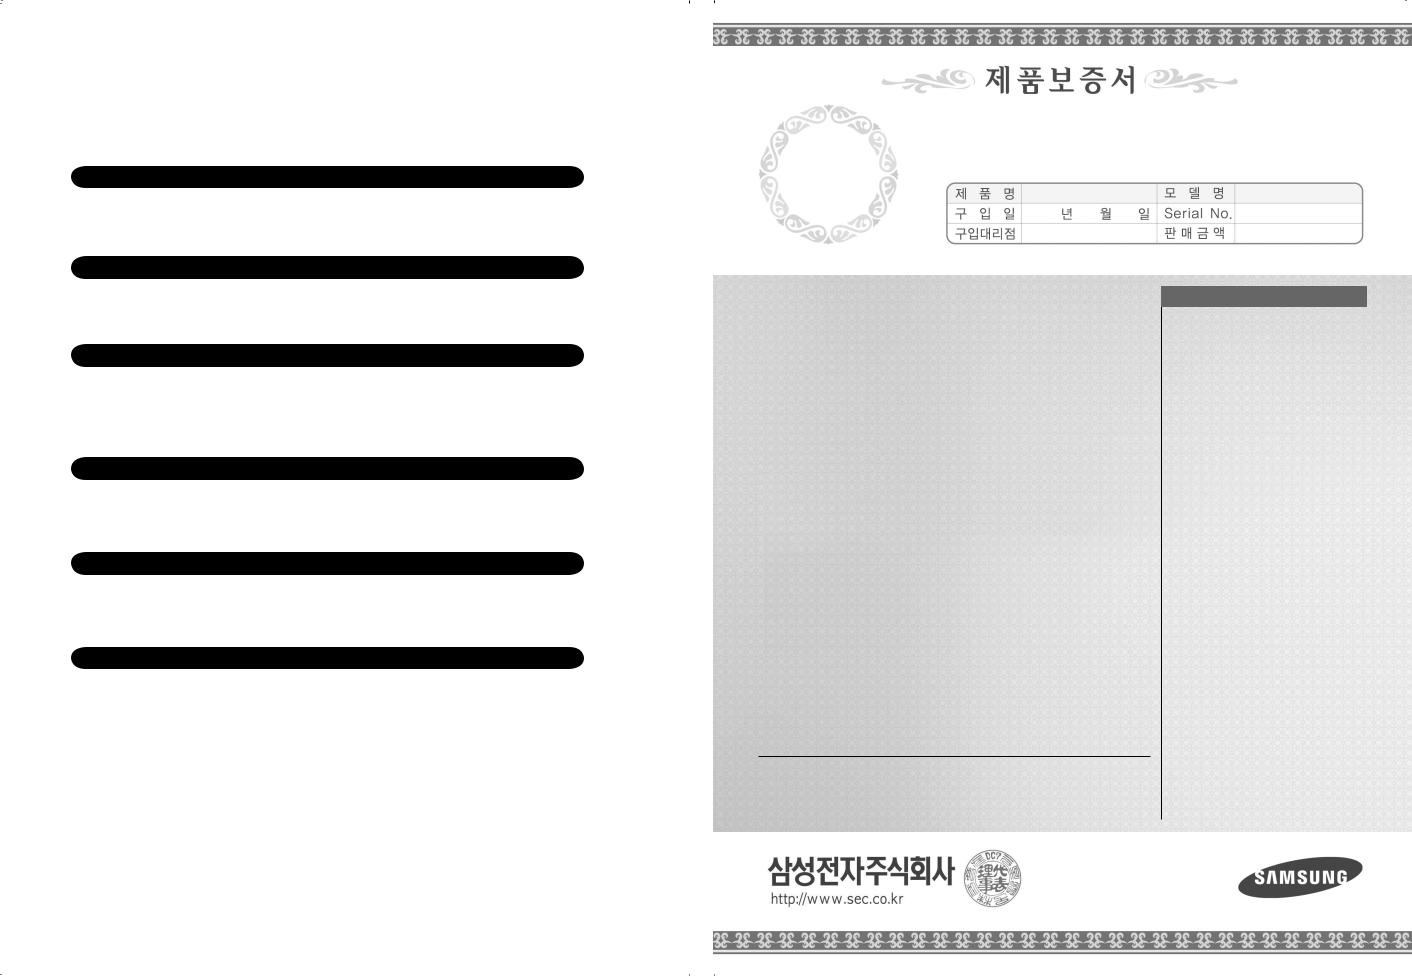 Samsung PN42B460B1D, PN50B460B1D User Manual